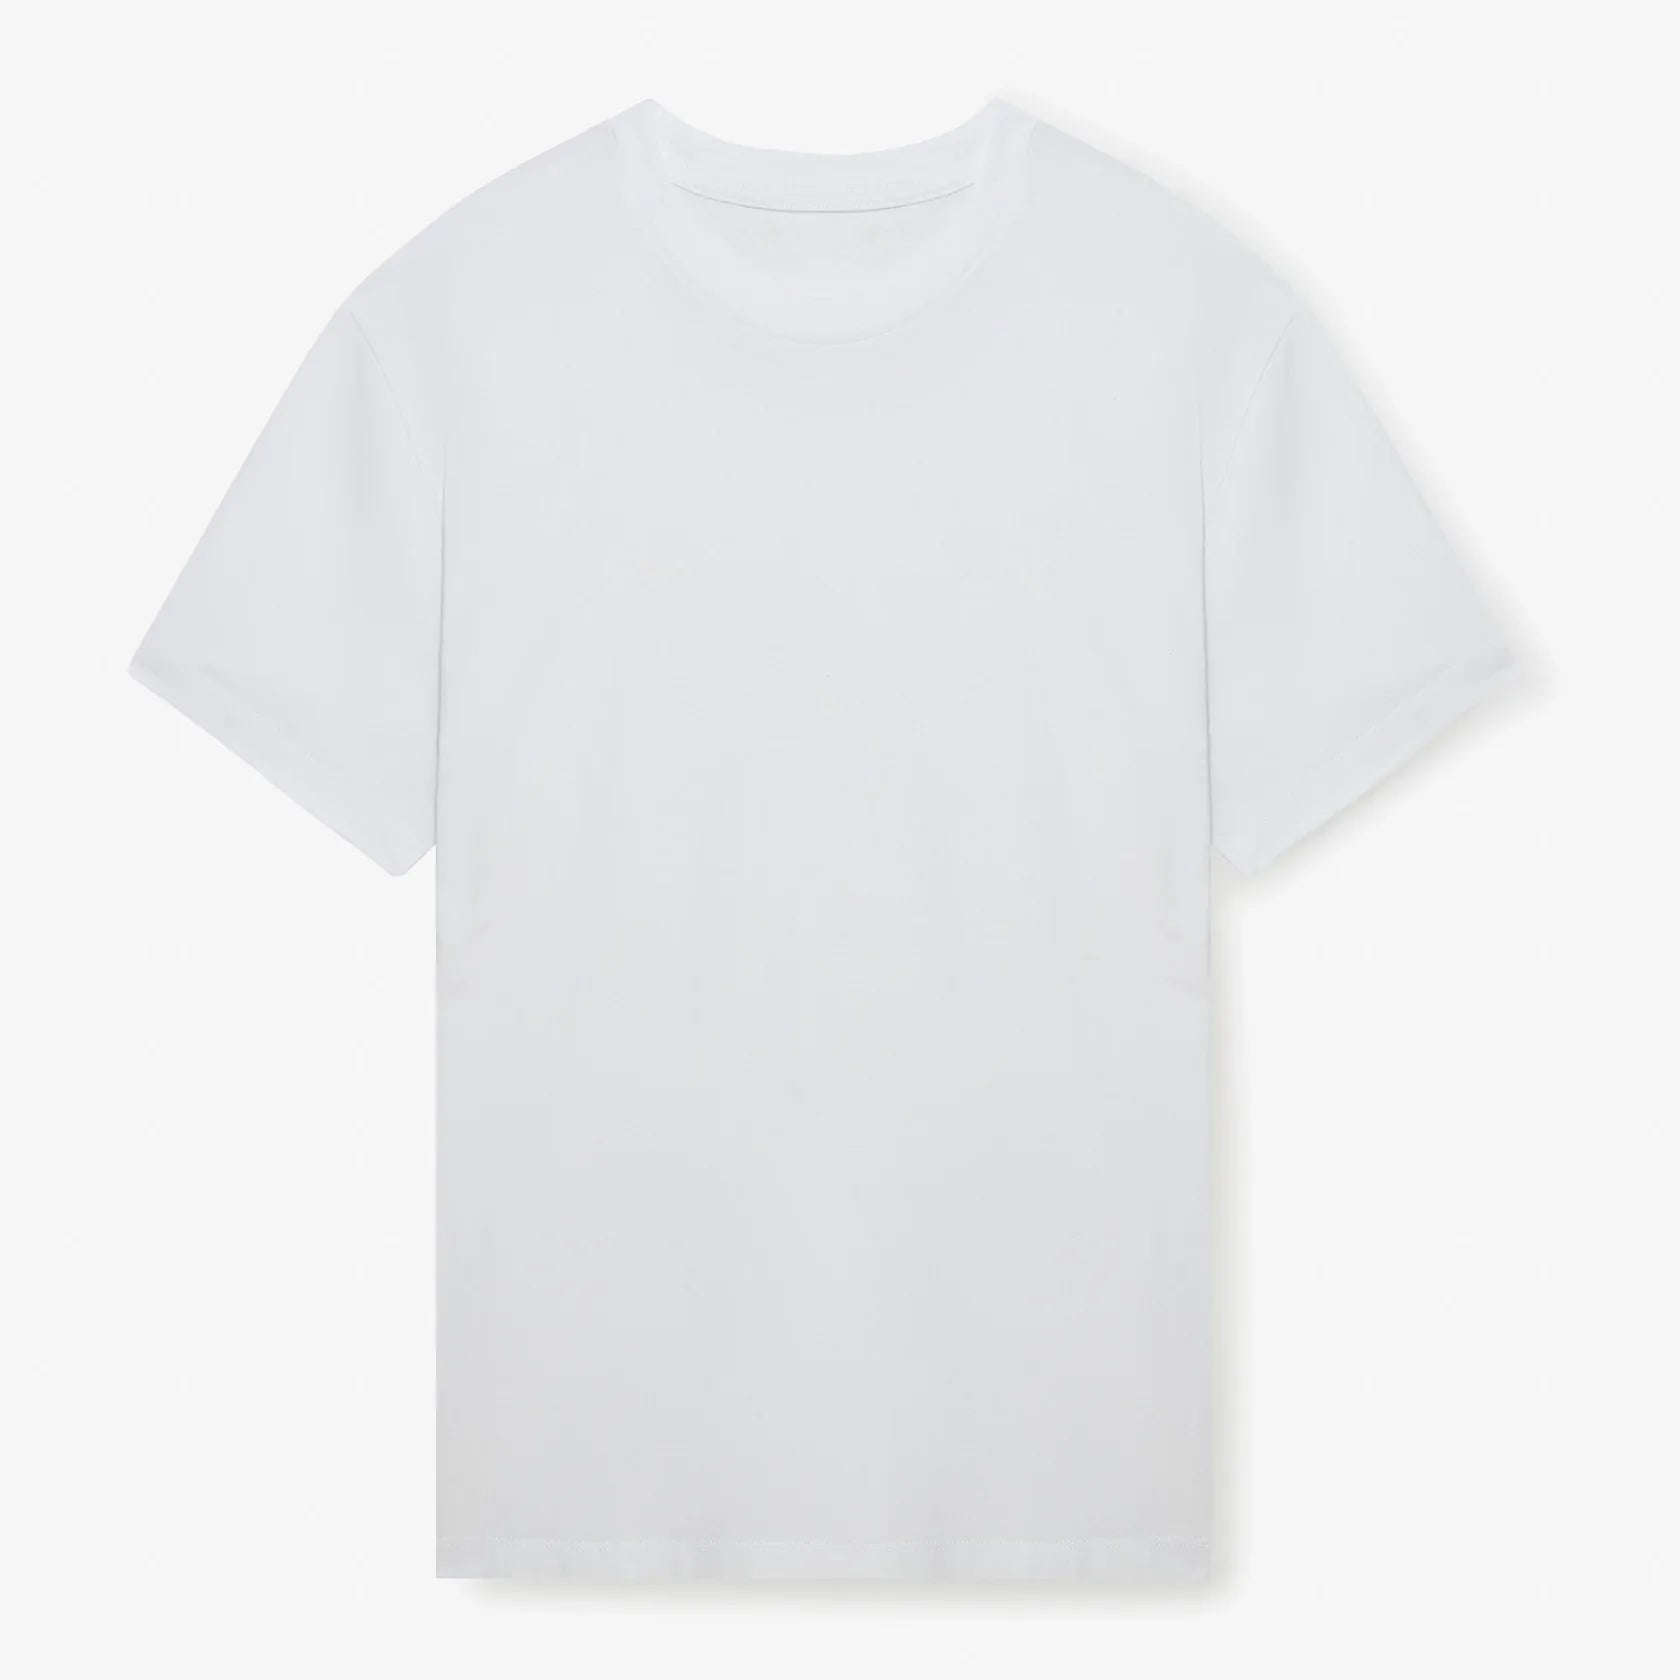 Milo & Dexter Classic Cotton T-Shirt in White Fall 23/24